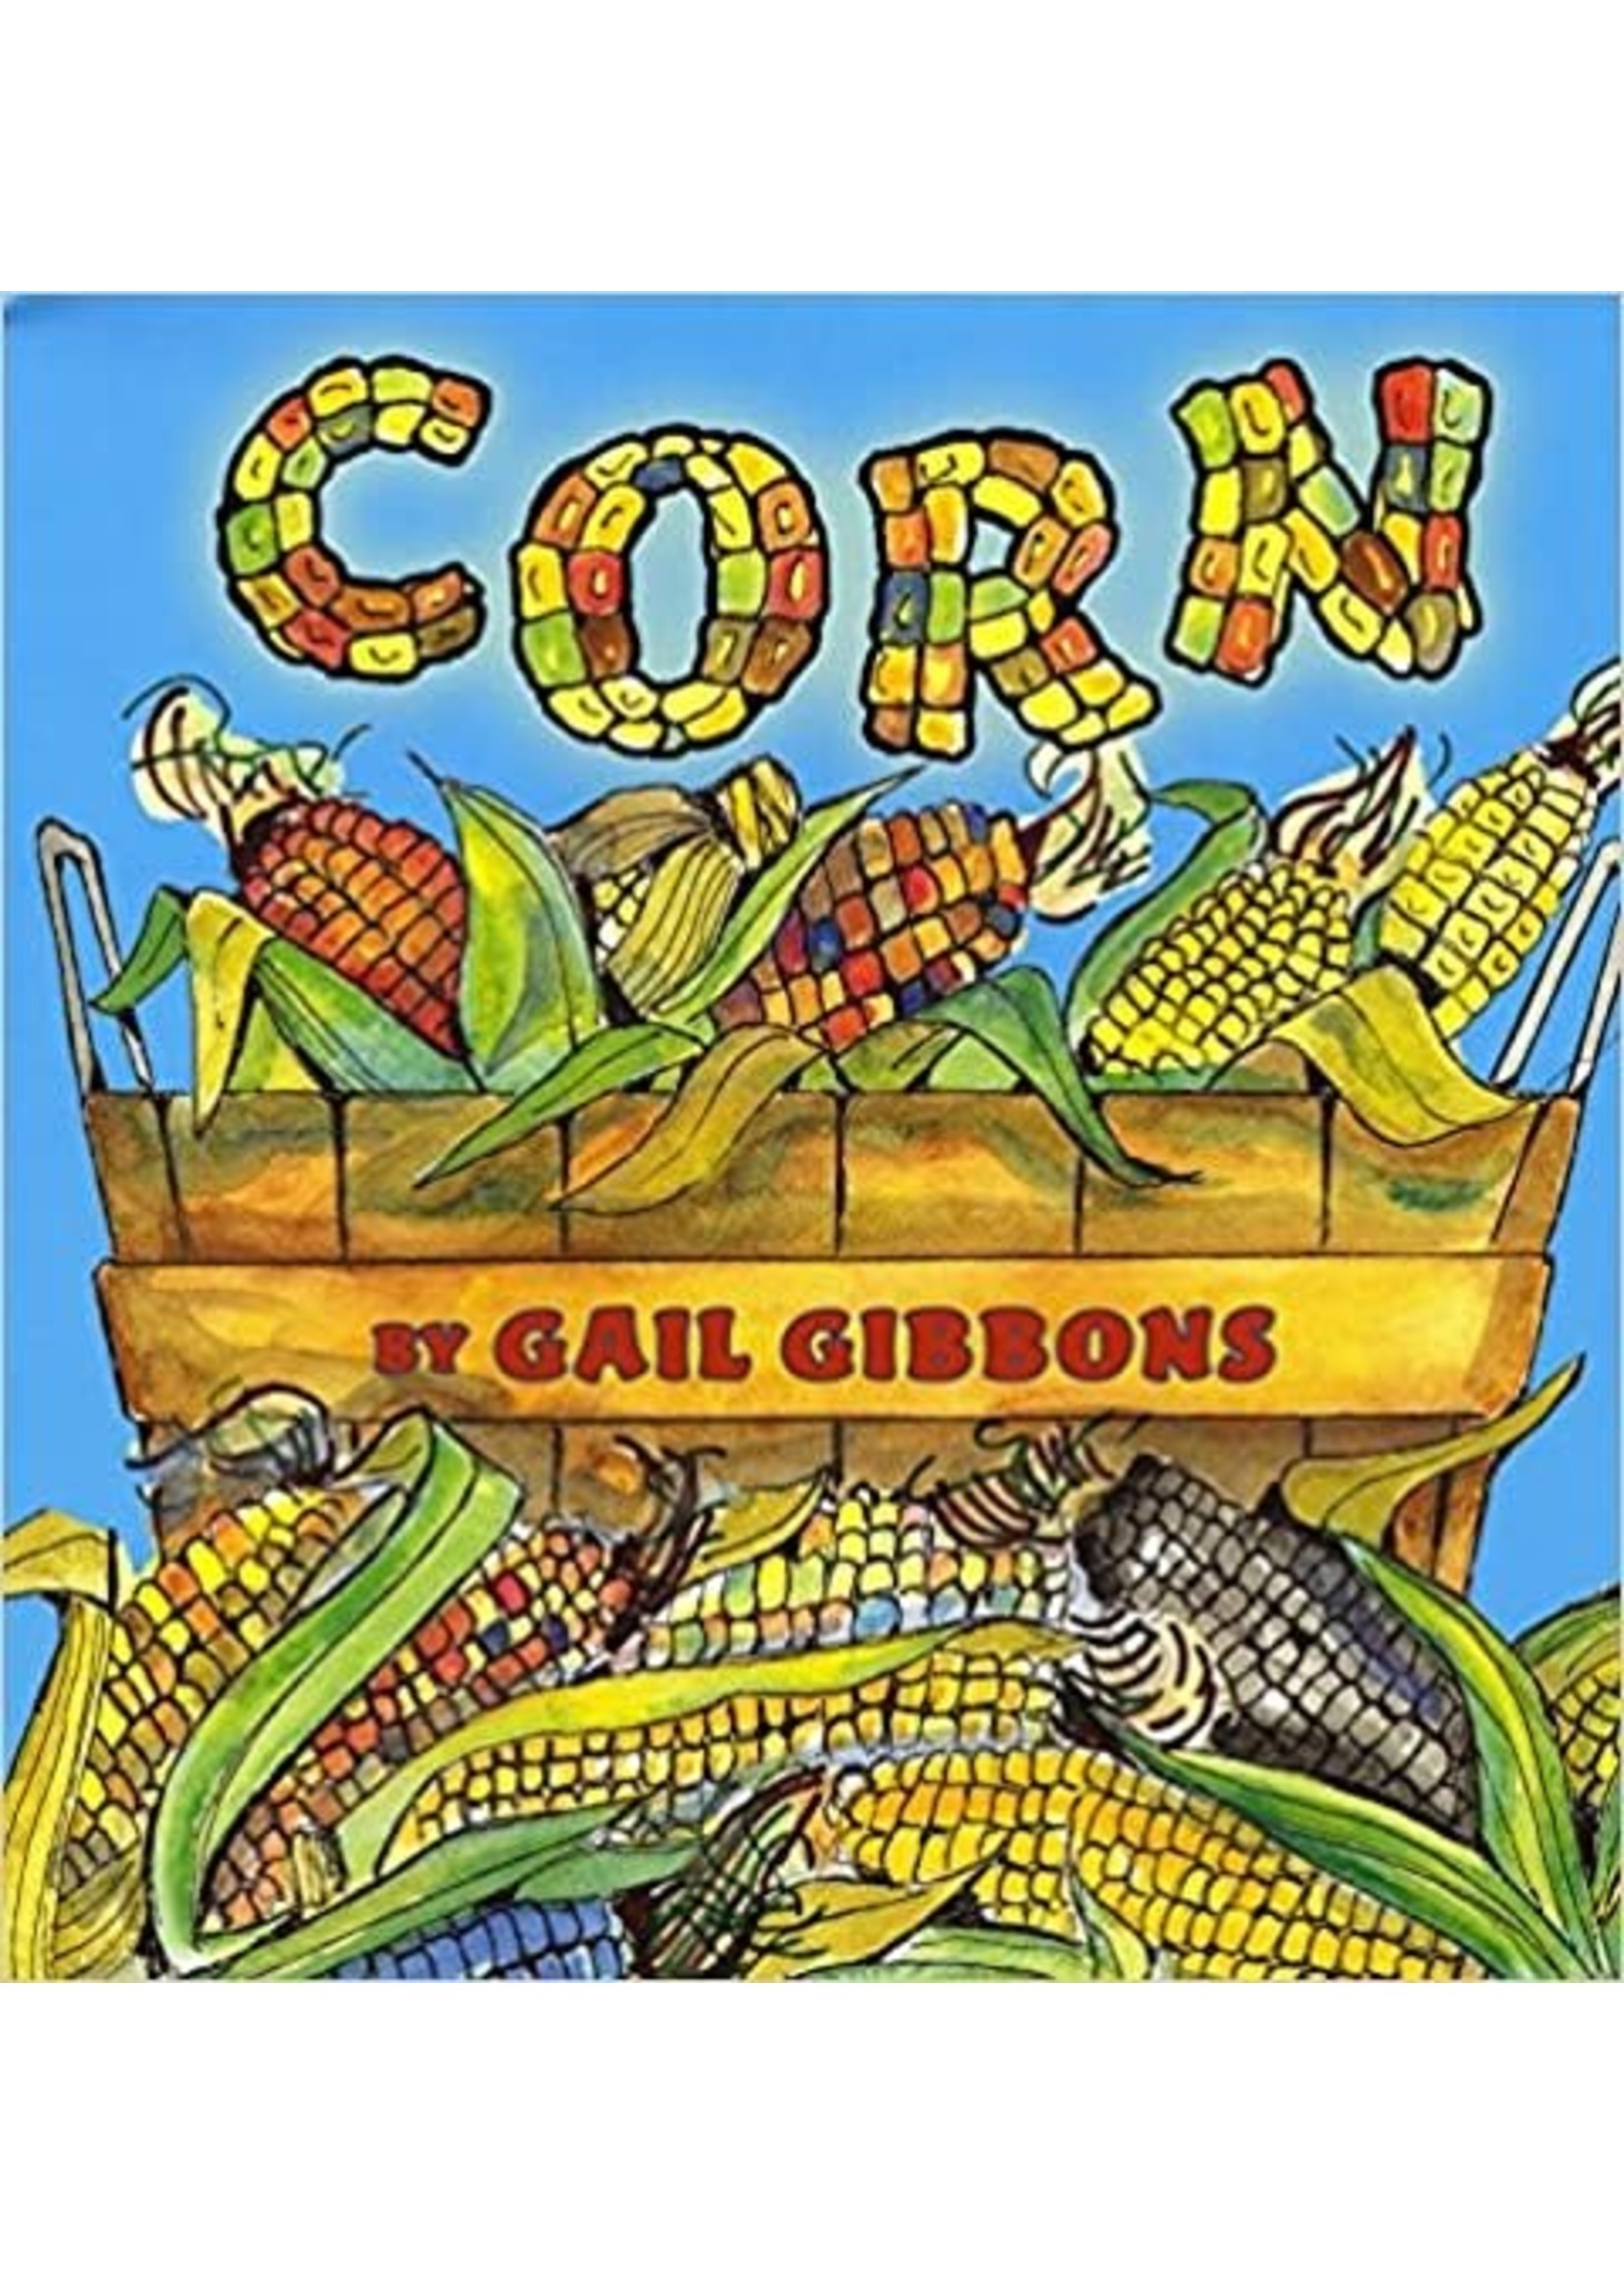 Corn by Gail Gibbons